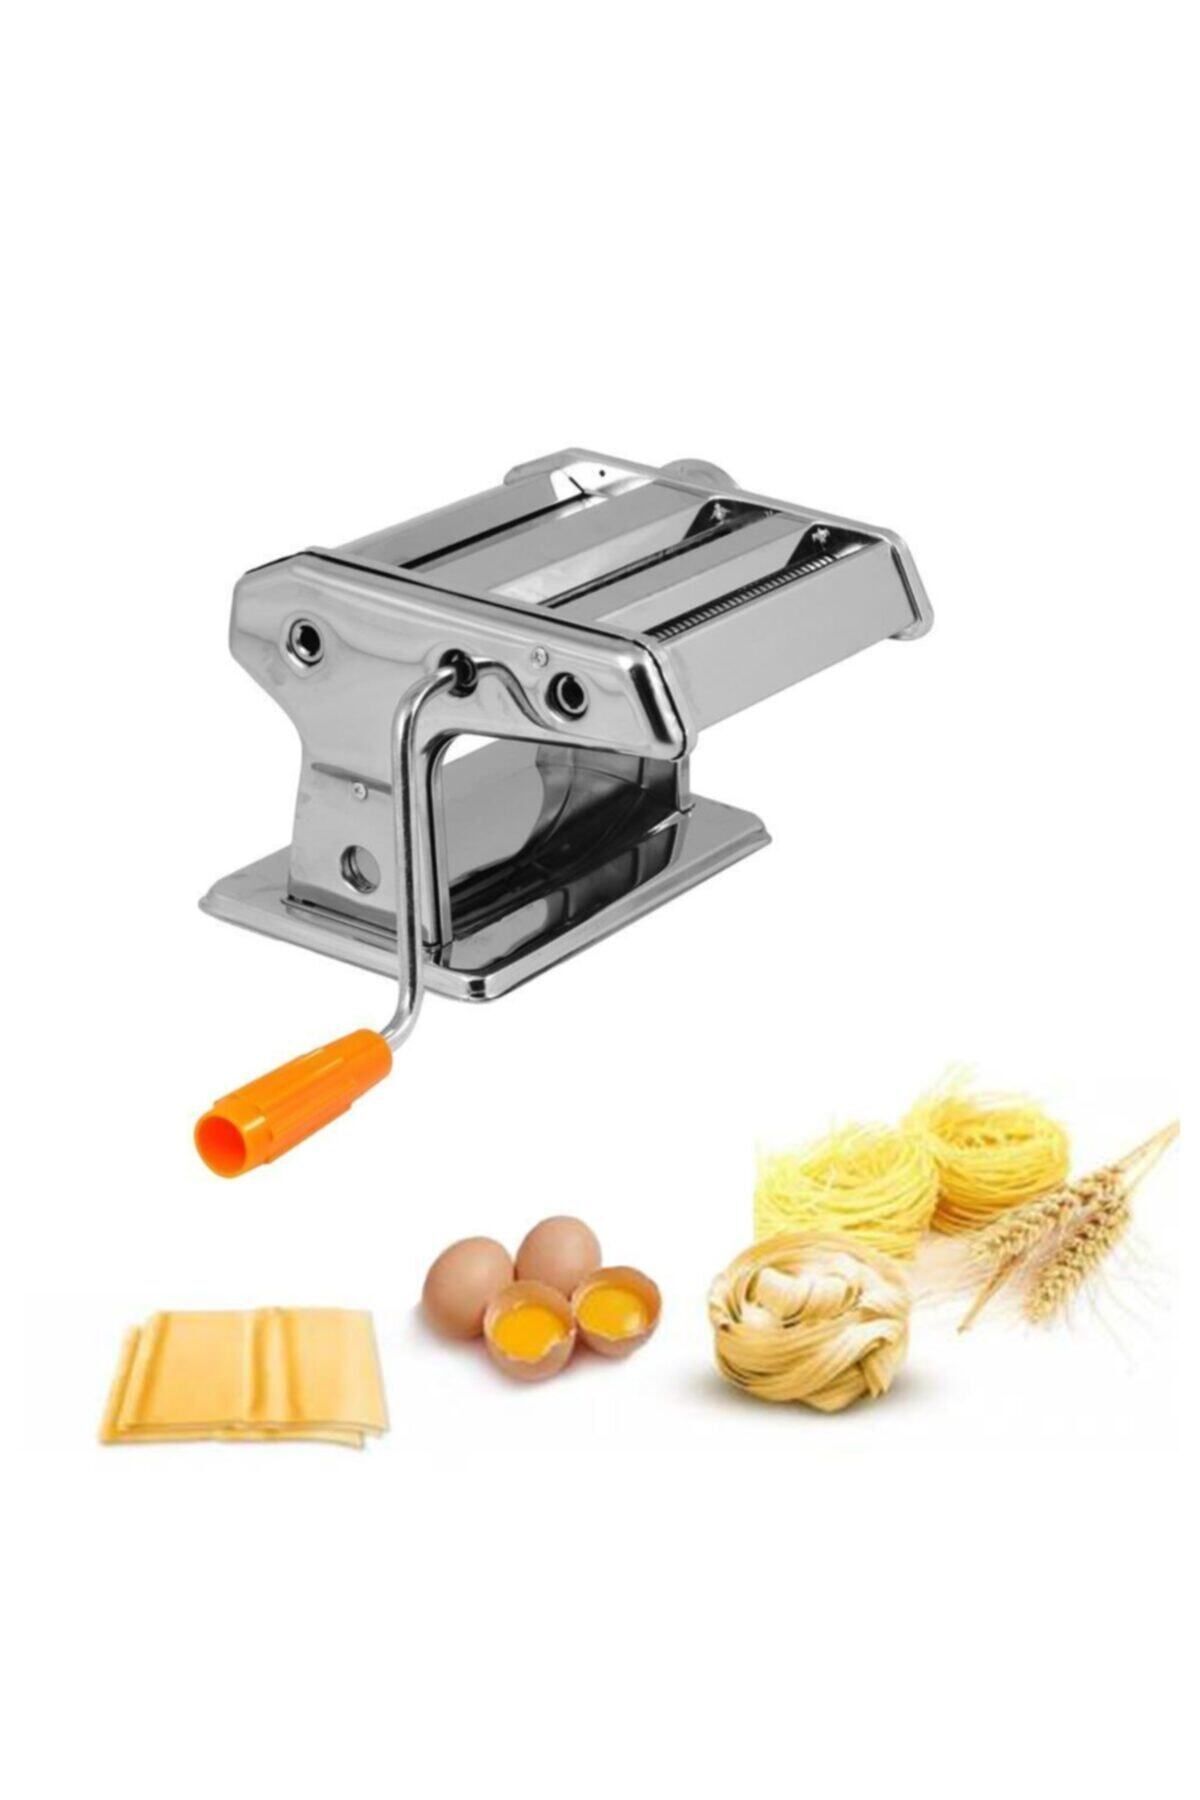 KfcHome 150 Mm Eriste Makinesi - Erişte Makinası - Makarna Yapma Makinesi - Pasta Maker